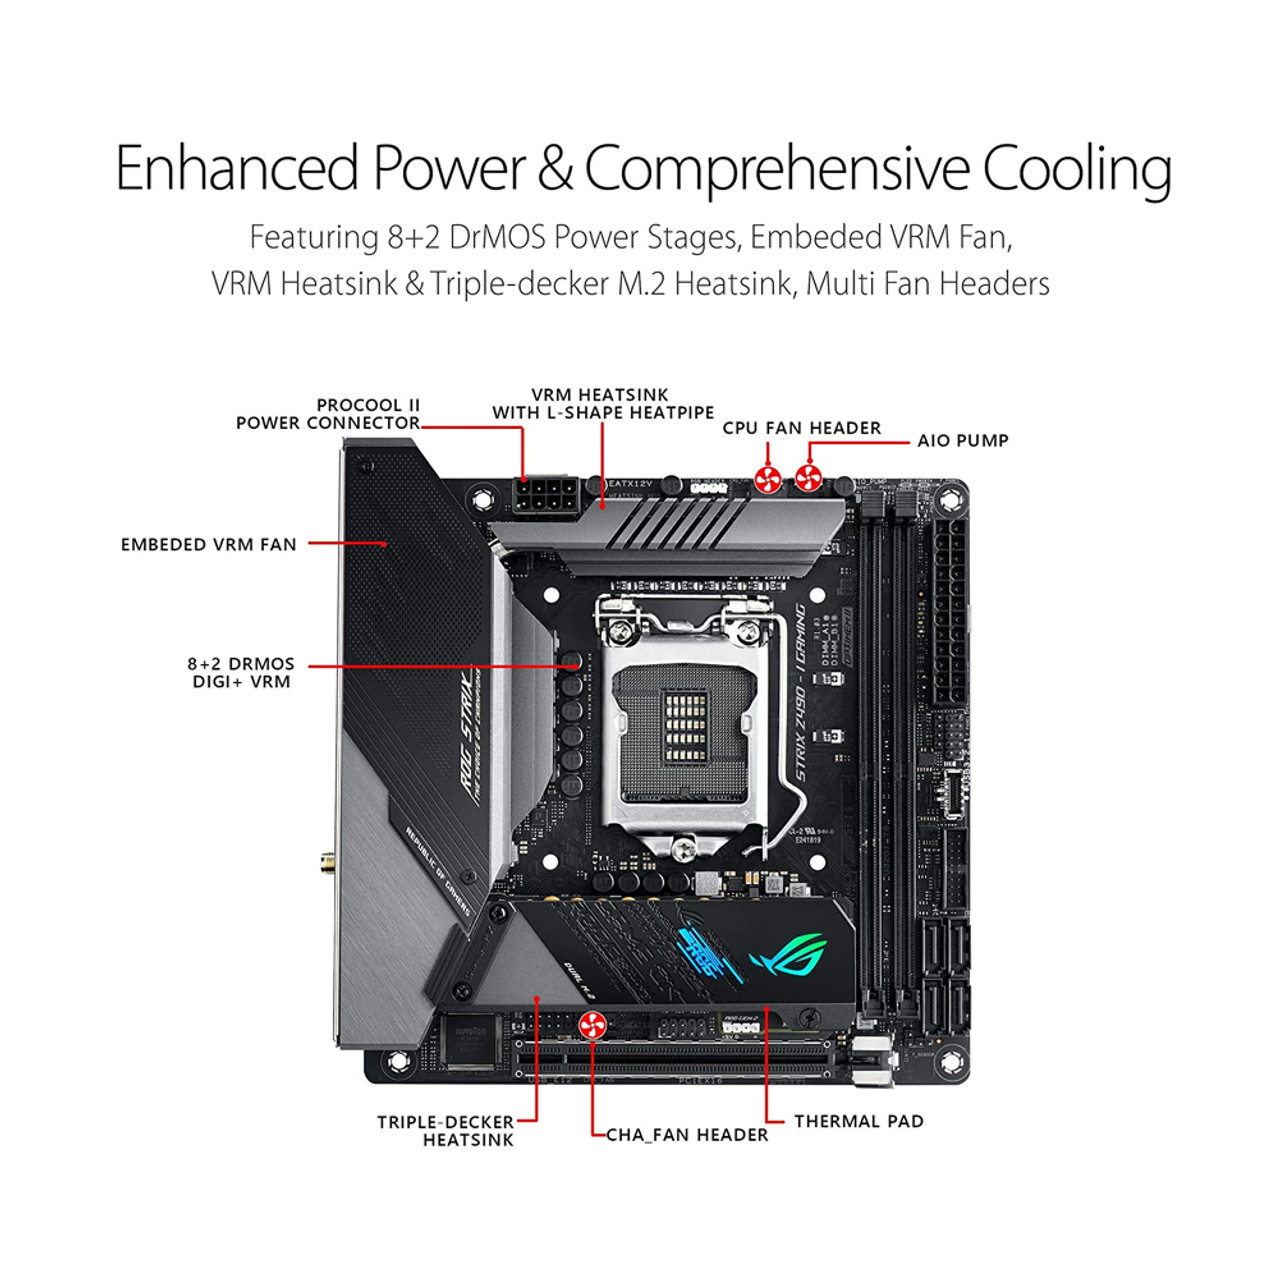 Asus ROG STRIX Z490-I GAMING Z490 (WiFi 6) LGA 1200 (Intel 10th Gen) Mini-ITX USB 3.2 Gaming Motherboard